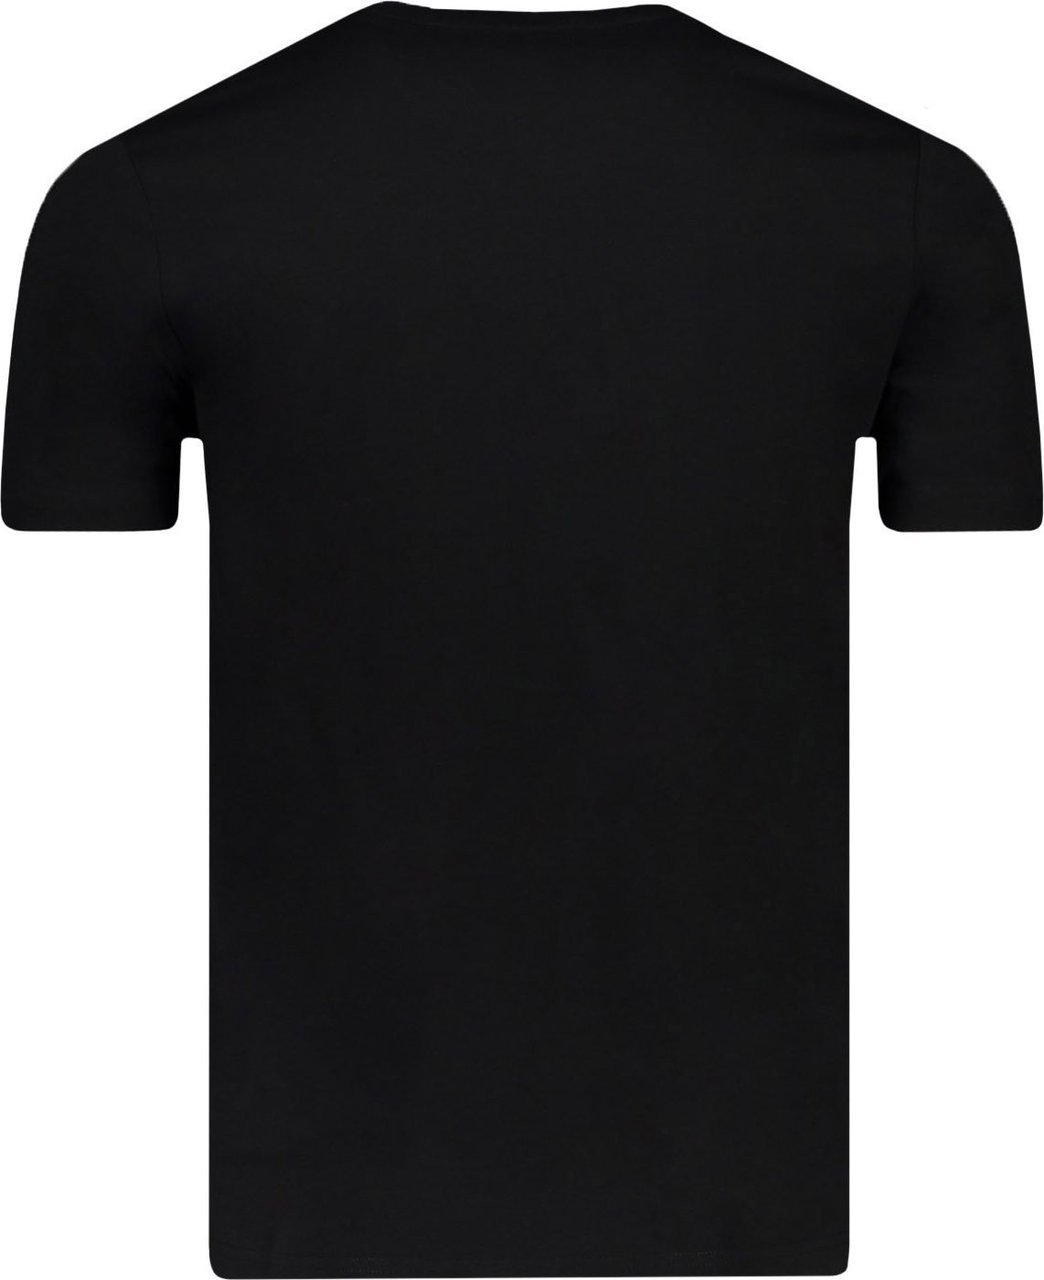 Iceberg T-shirt Zwart Black